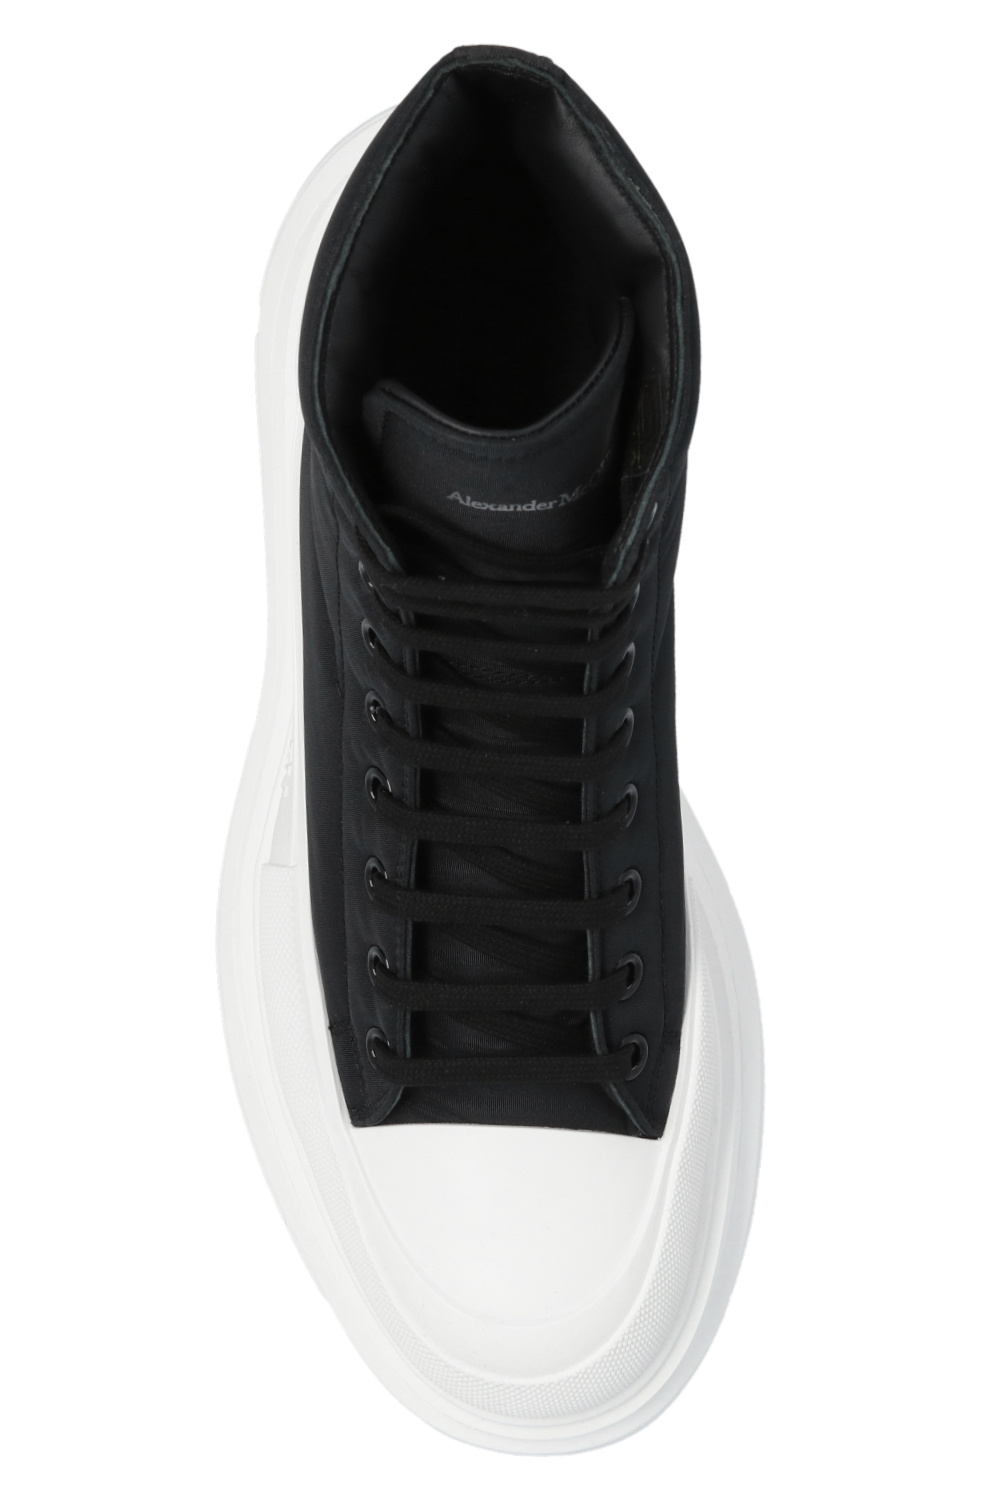 Alexander McQueen Heel Tab Wedge Sole Sneaker White & Black